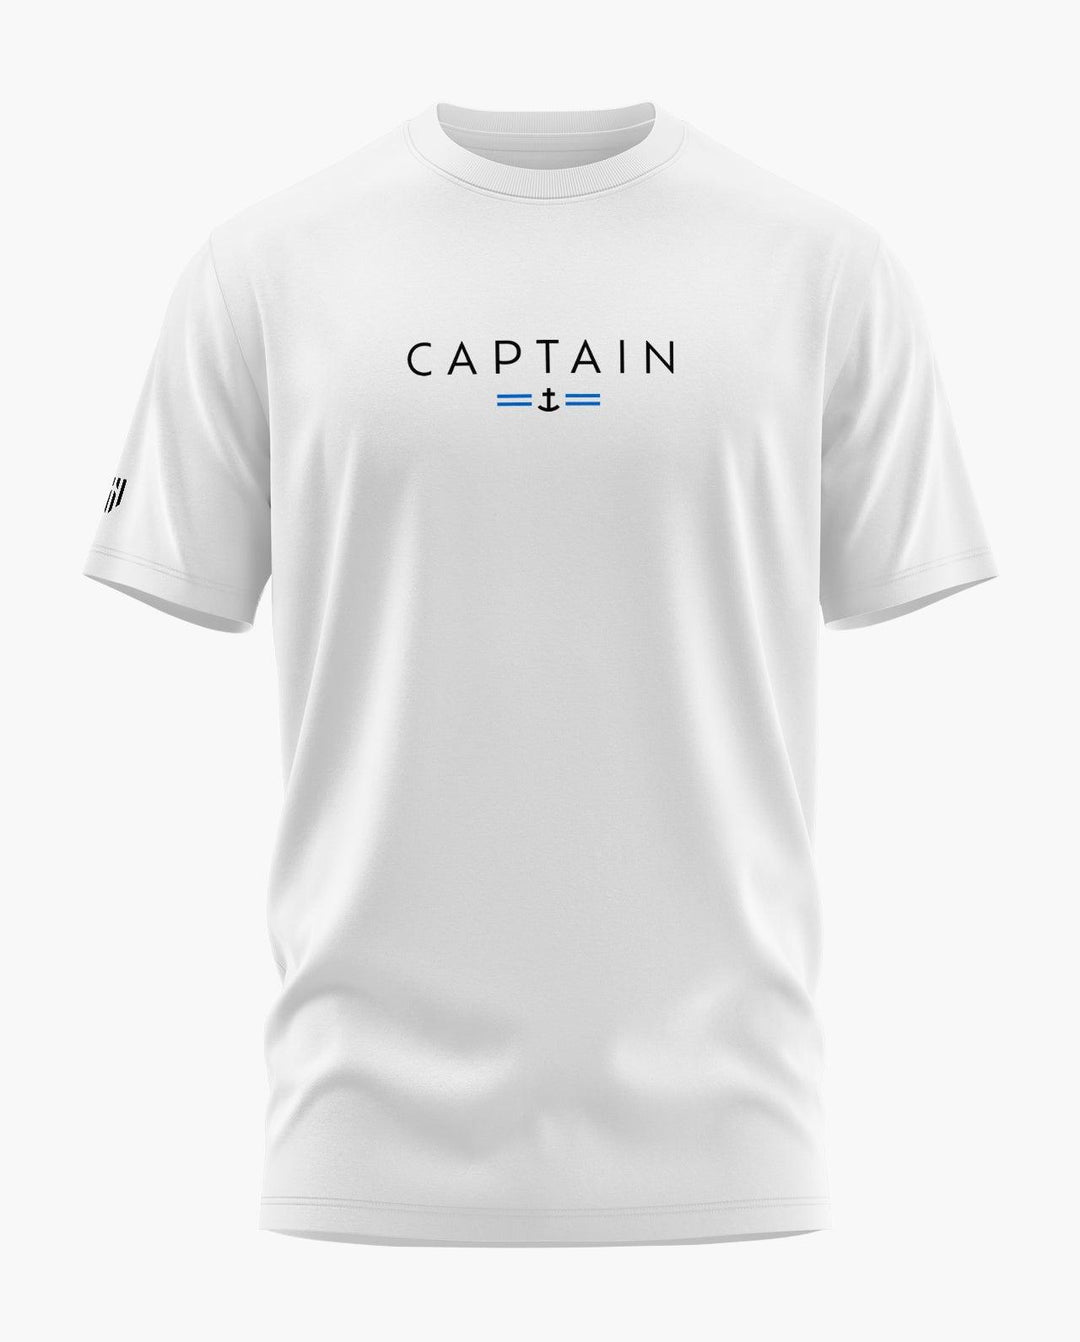 Captain Navy T-Shirt - Aero Armour